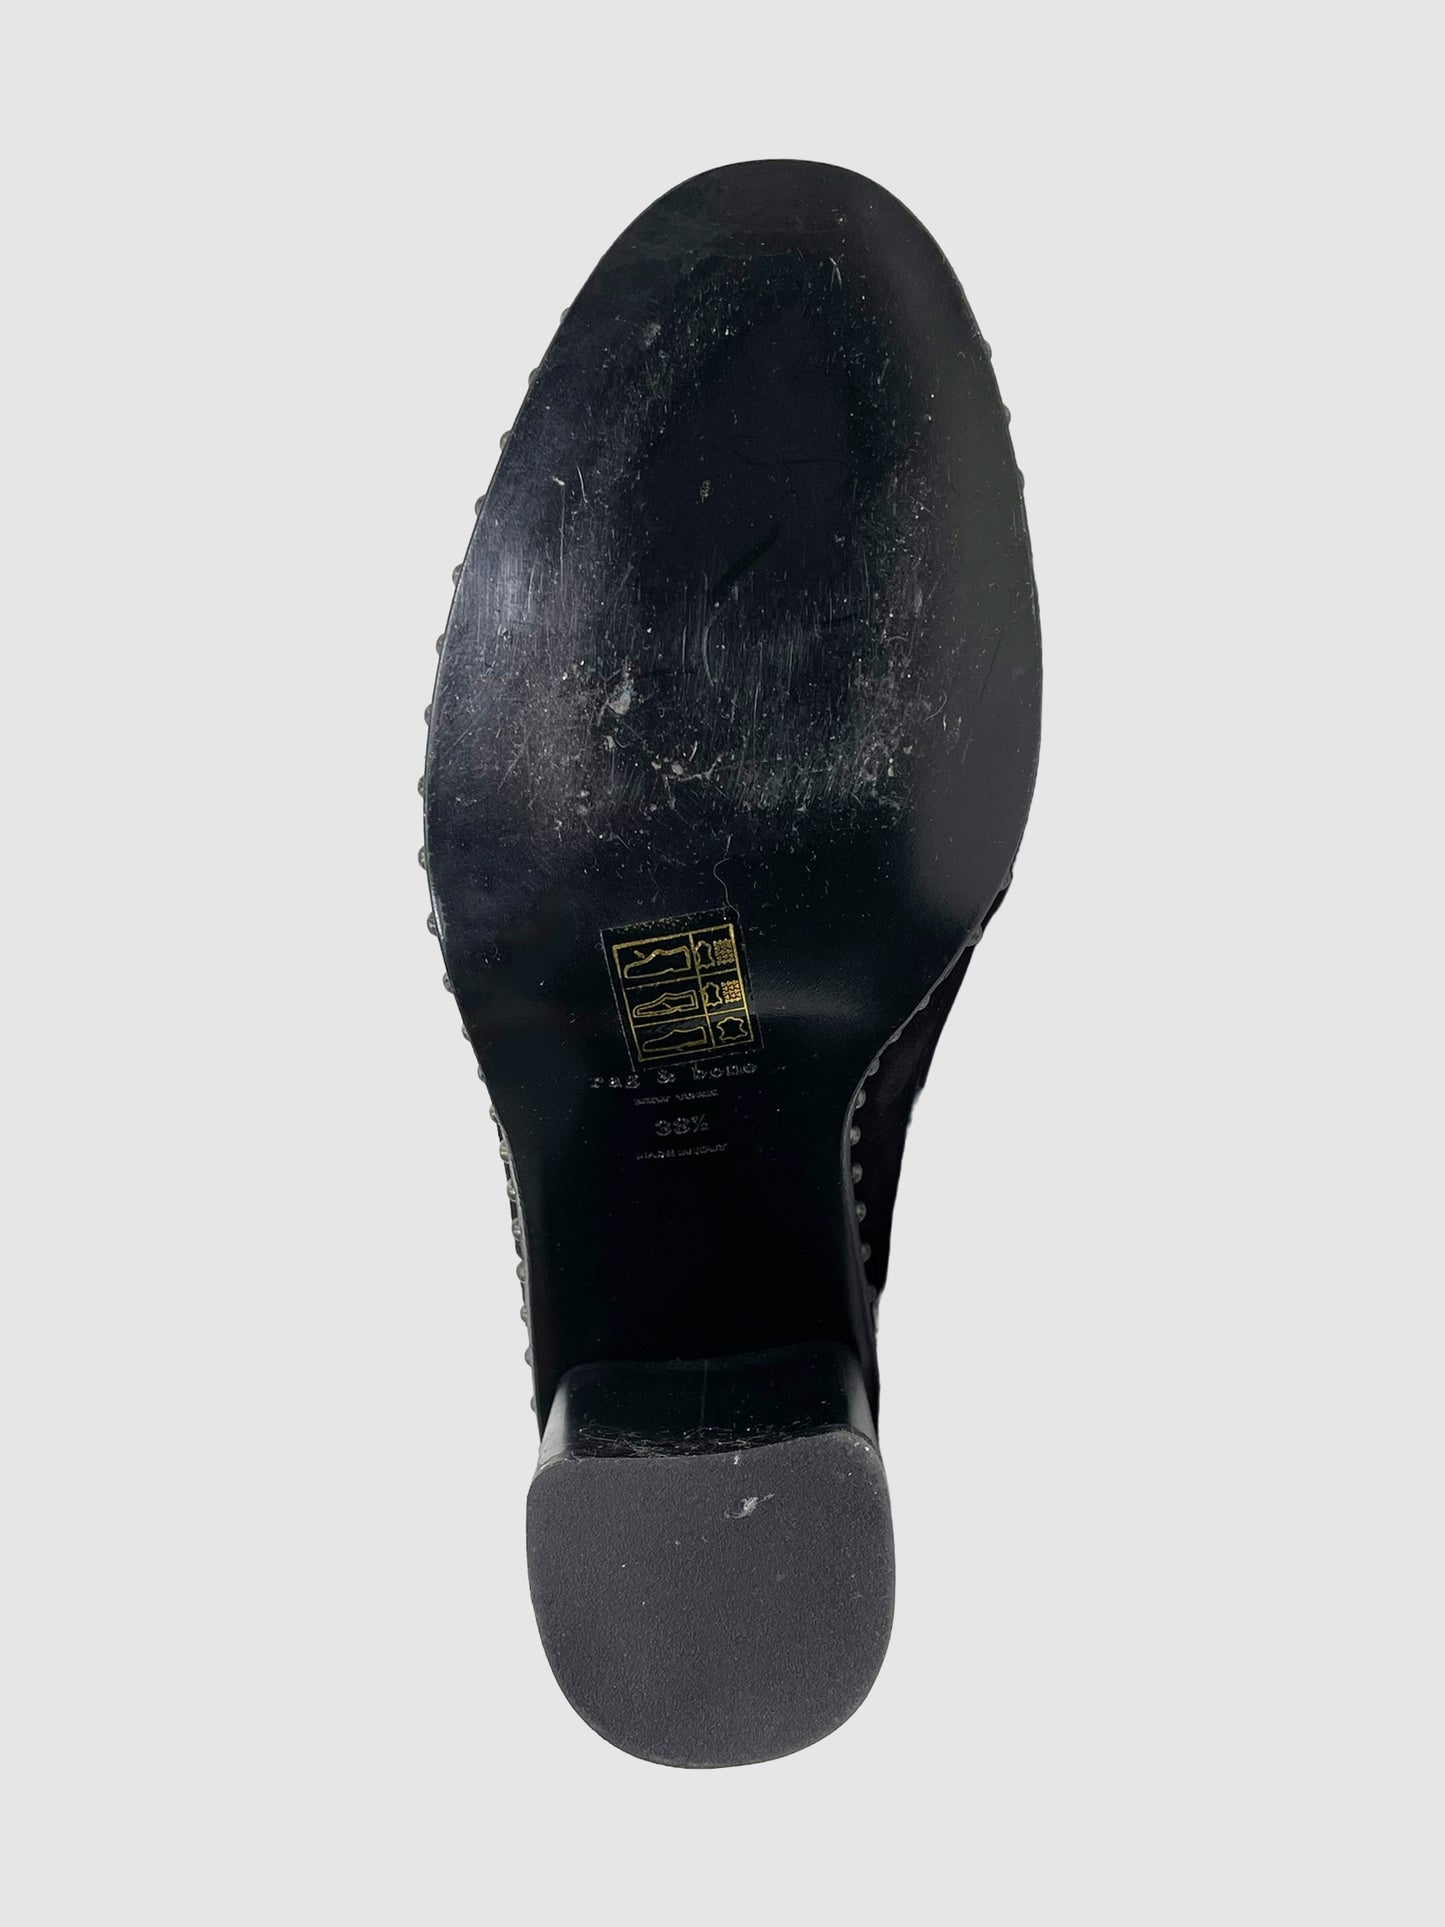 Rag & Bone Suede Heeled Boots - Size 38.5